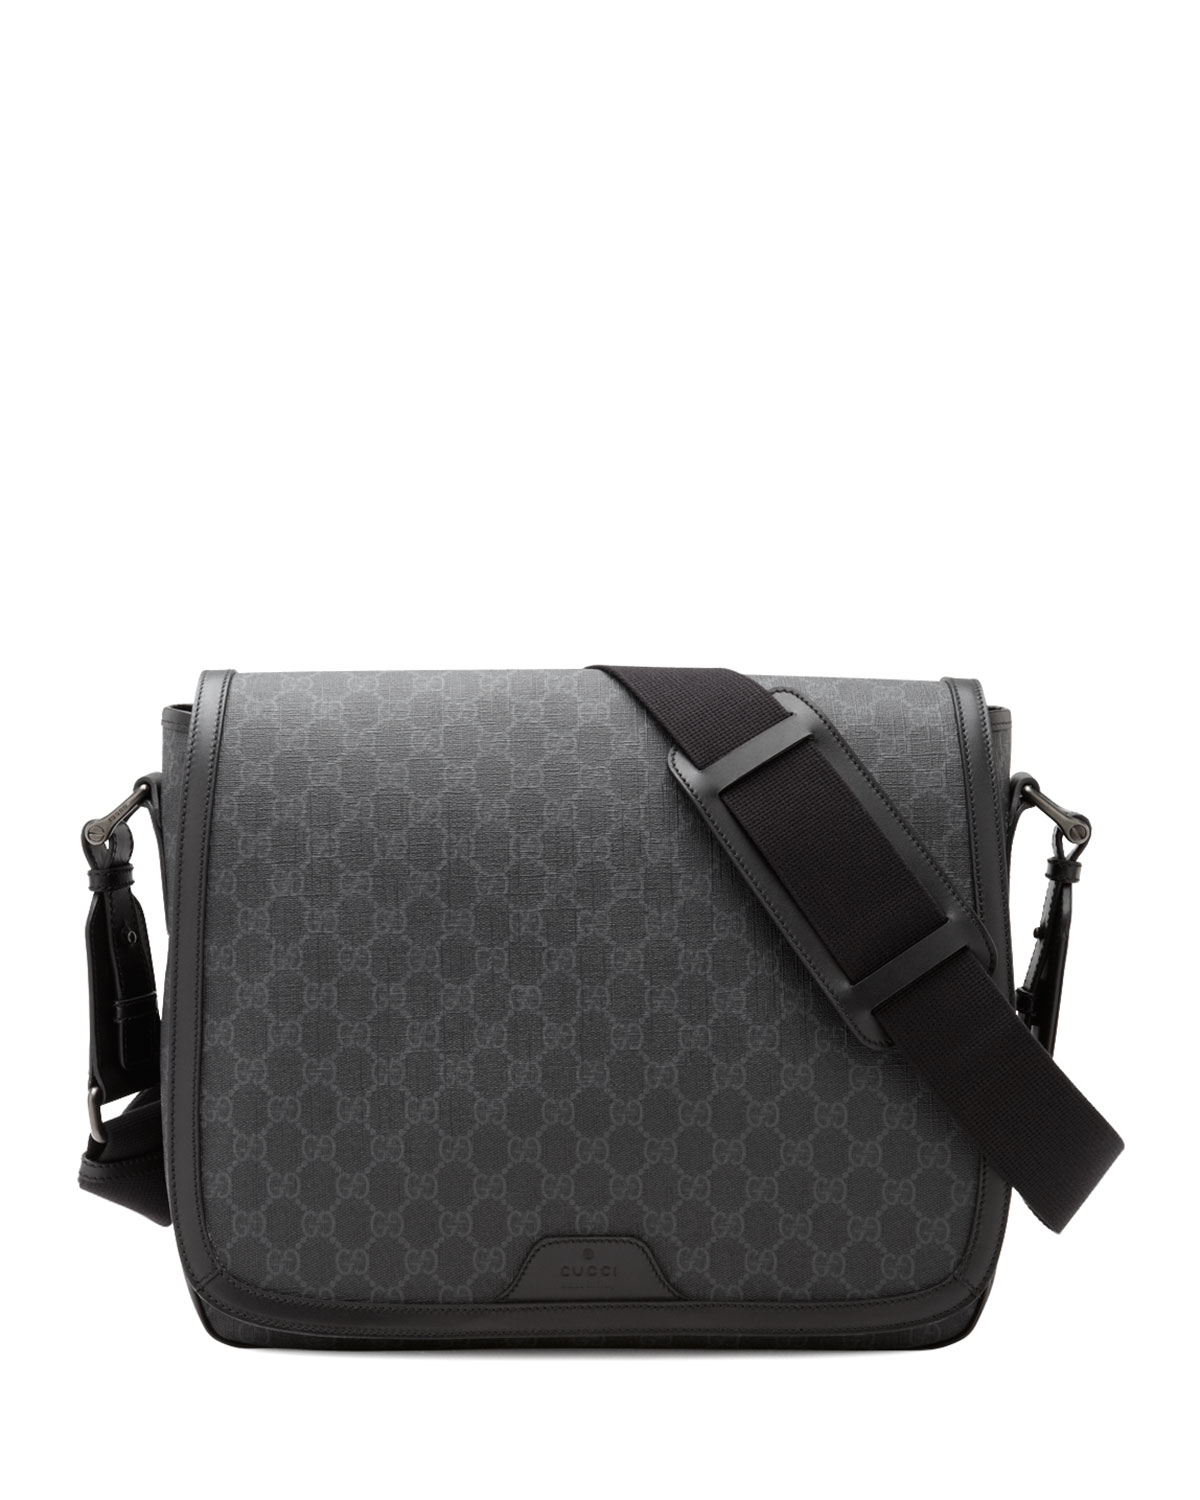 Lyst - Gucci Gg Supreme Canvas Messenger Bag in Black